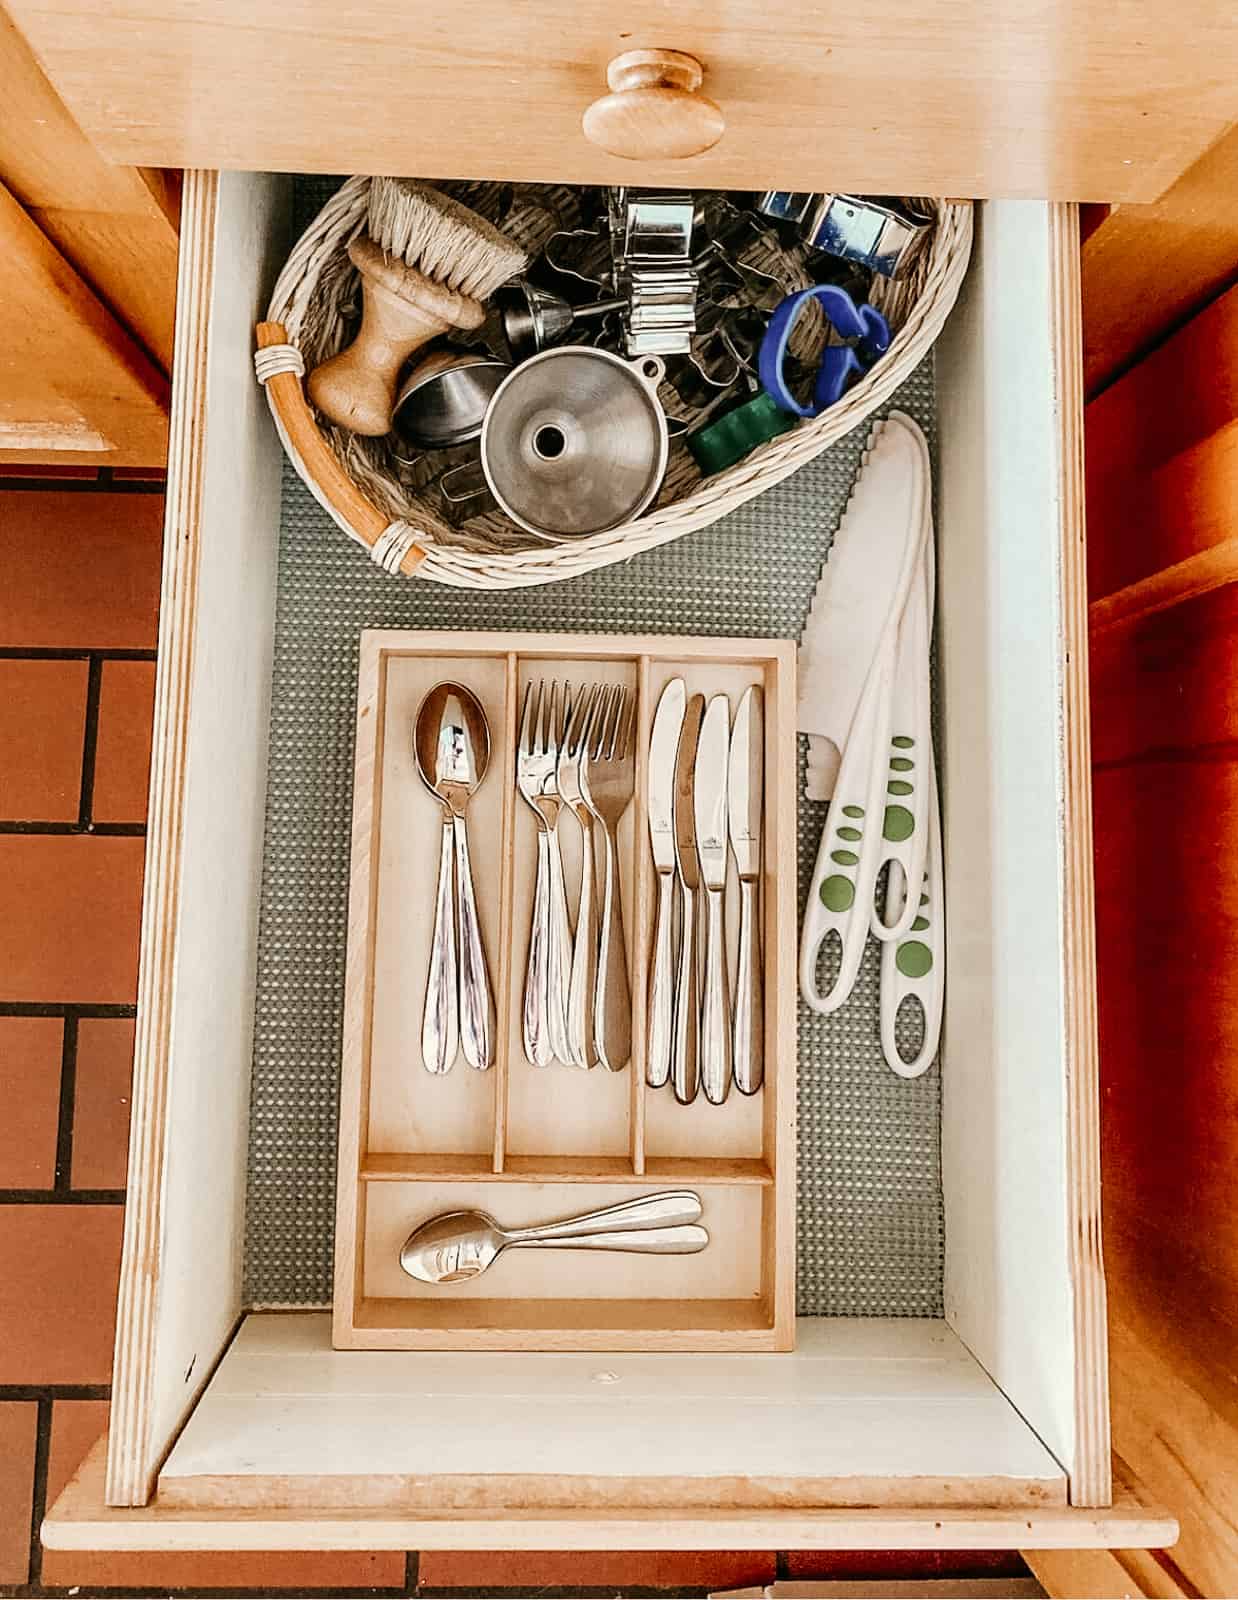 Kid's kitchen tools in drawer organizers 